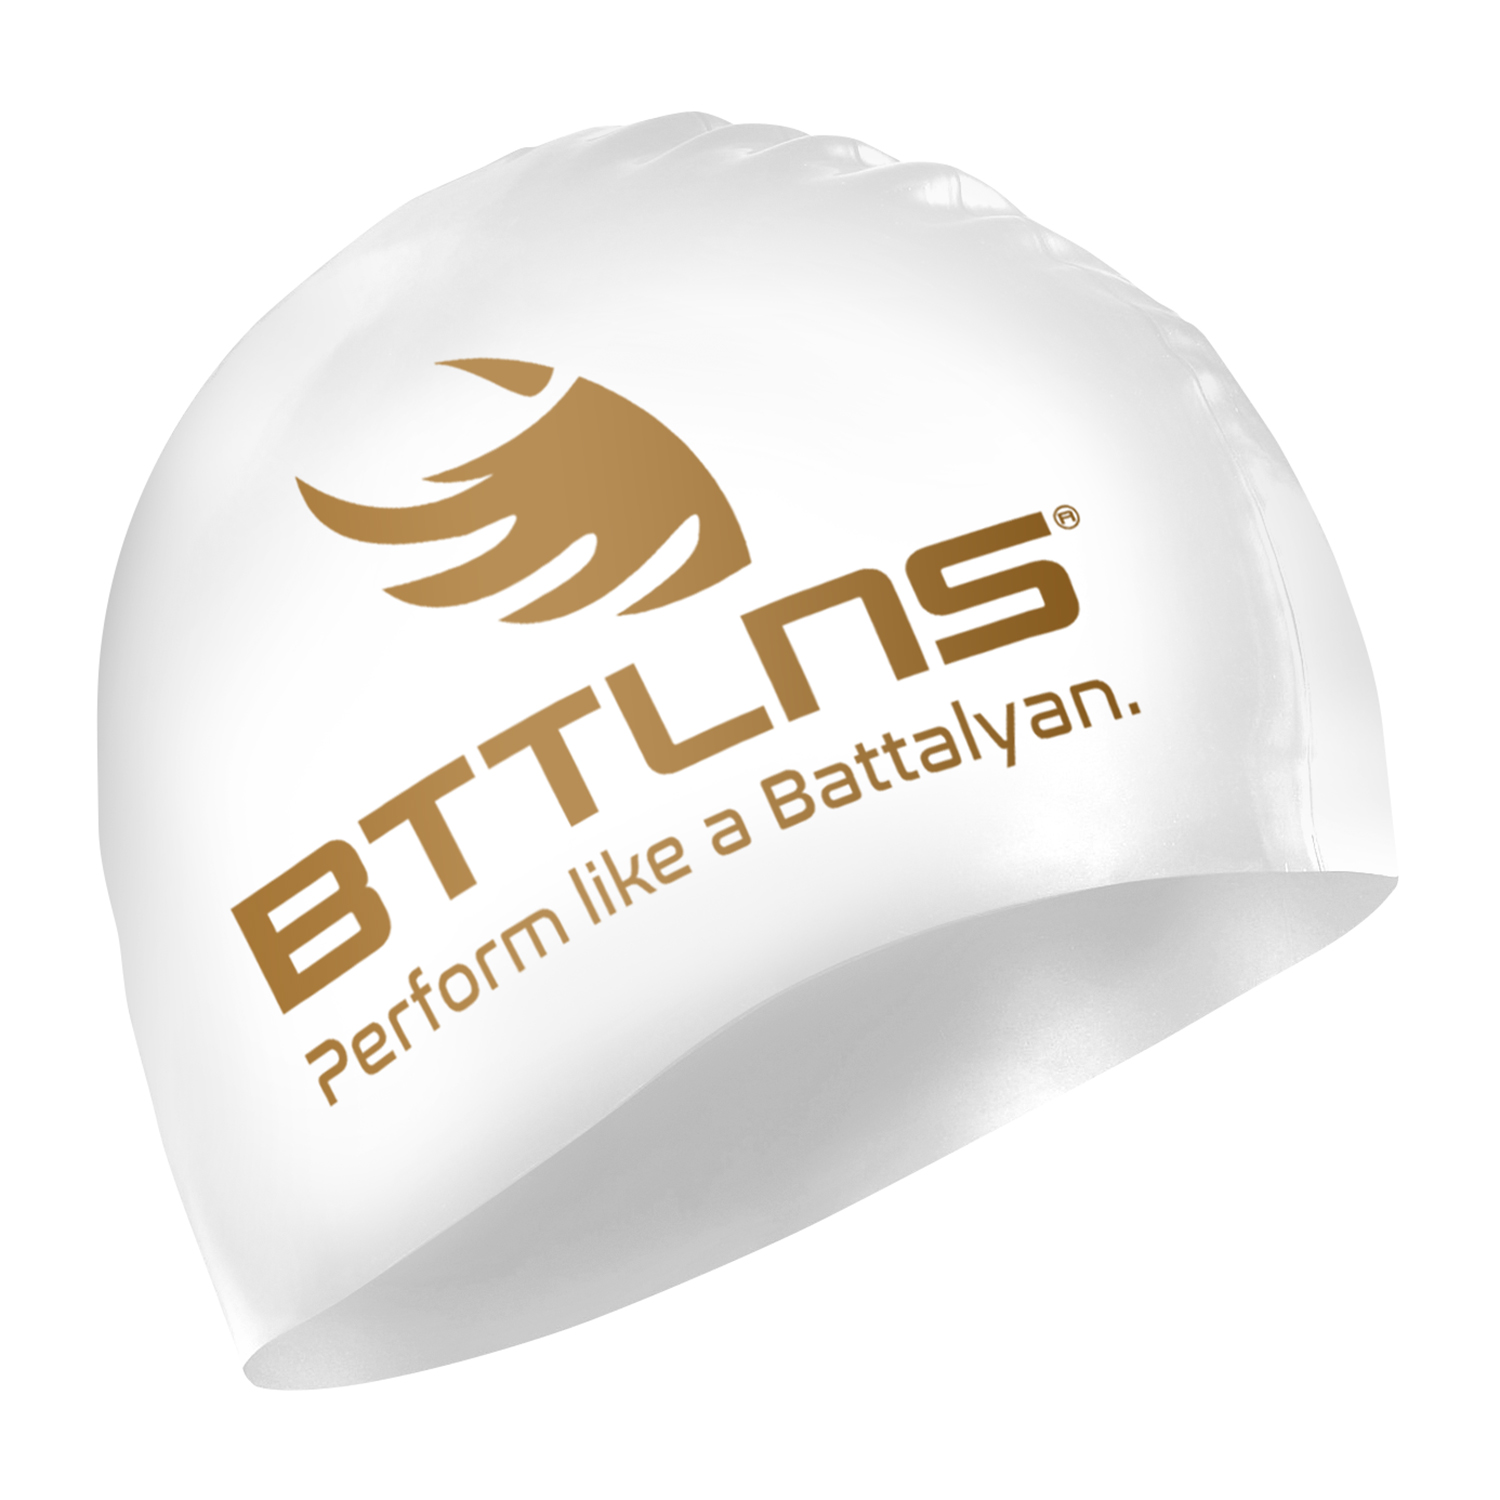 BTTLNS Absorber 2.0 Silicone swimcap white/gold  0318005-103